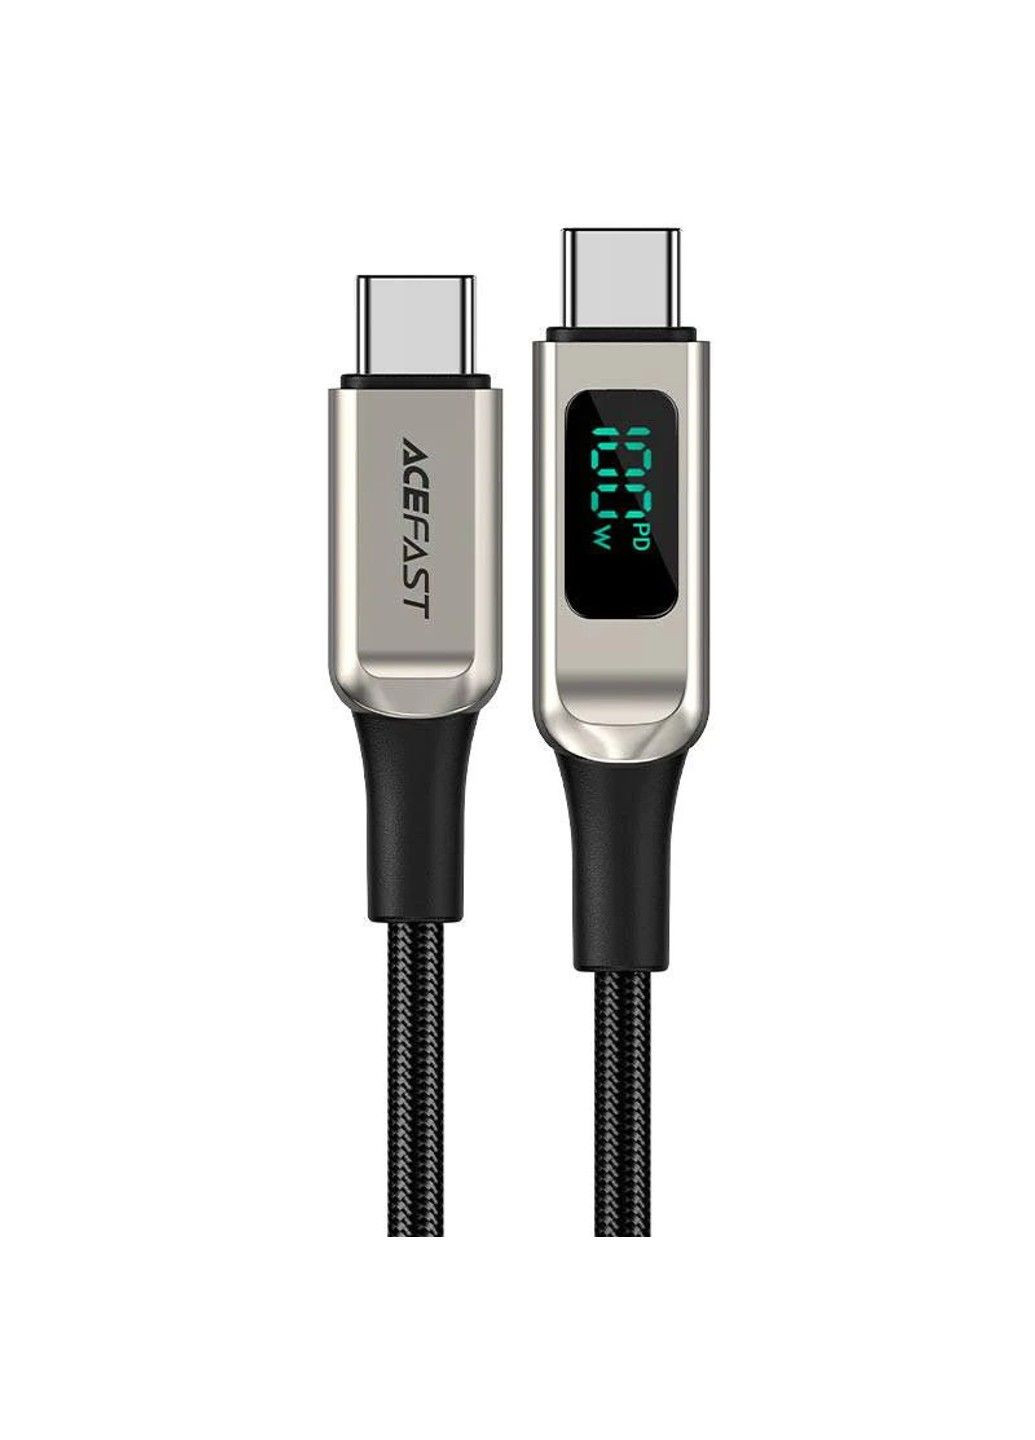 Дата кабель C6-03 USB-C to USB-C 100W zinc alloy digital display braided (2m) Acefast (291881786)